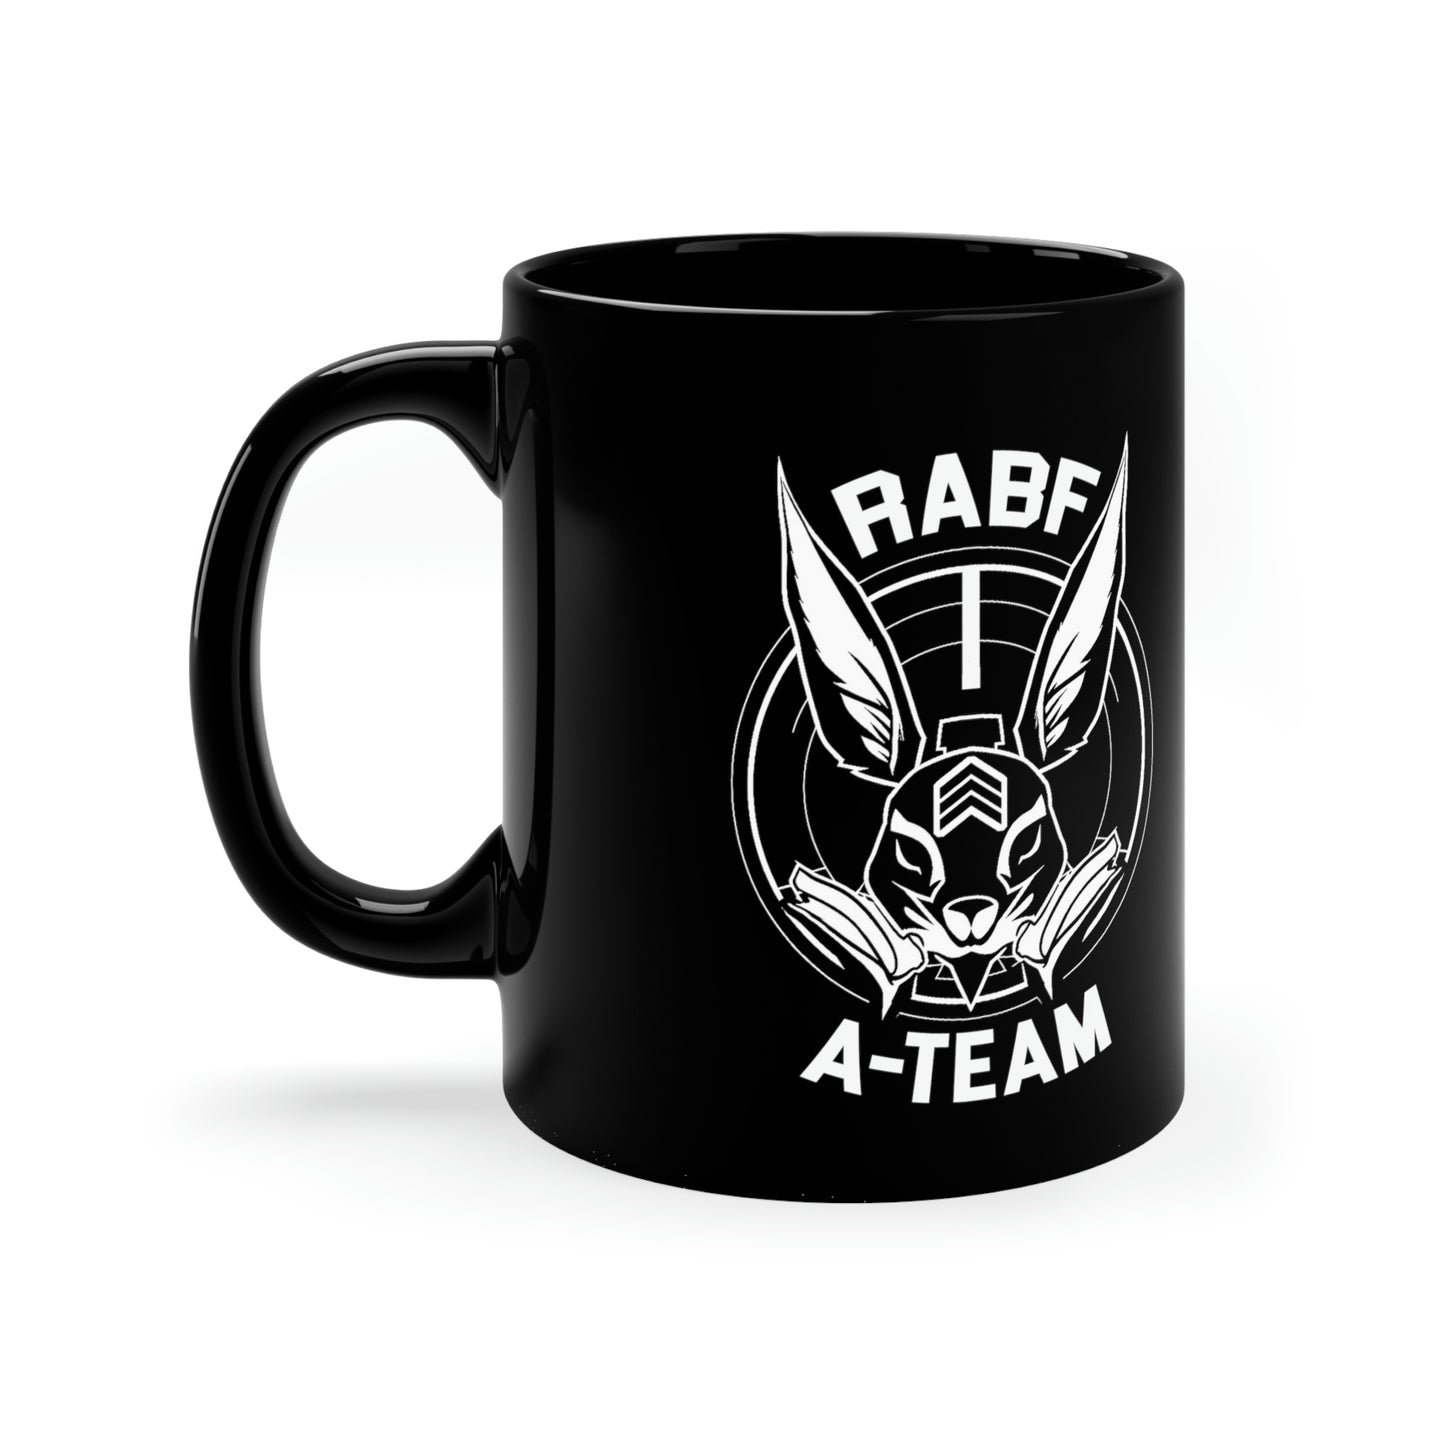 RABF - Team Mug